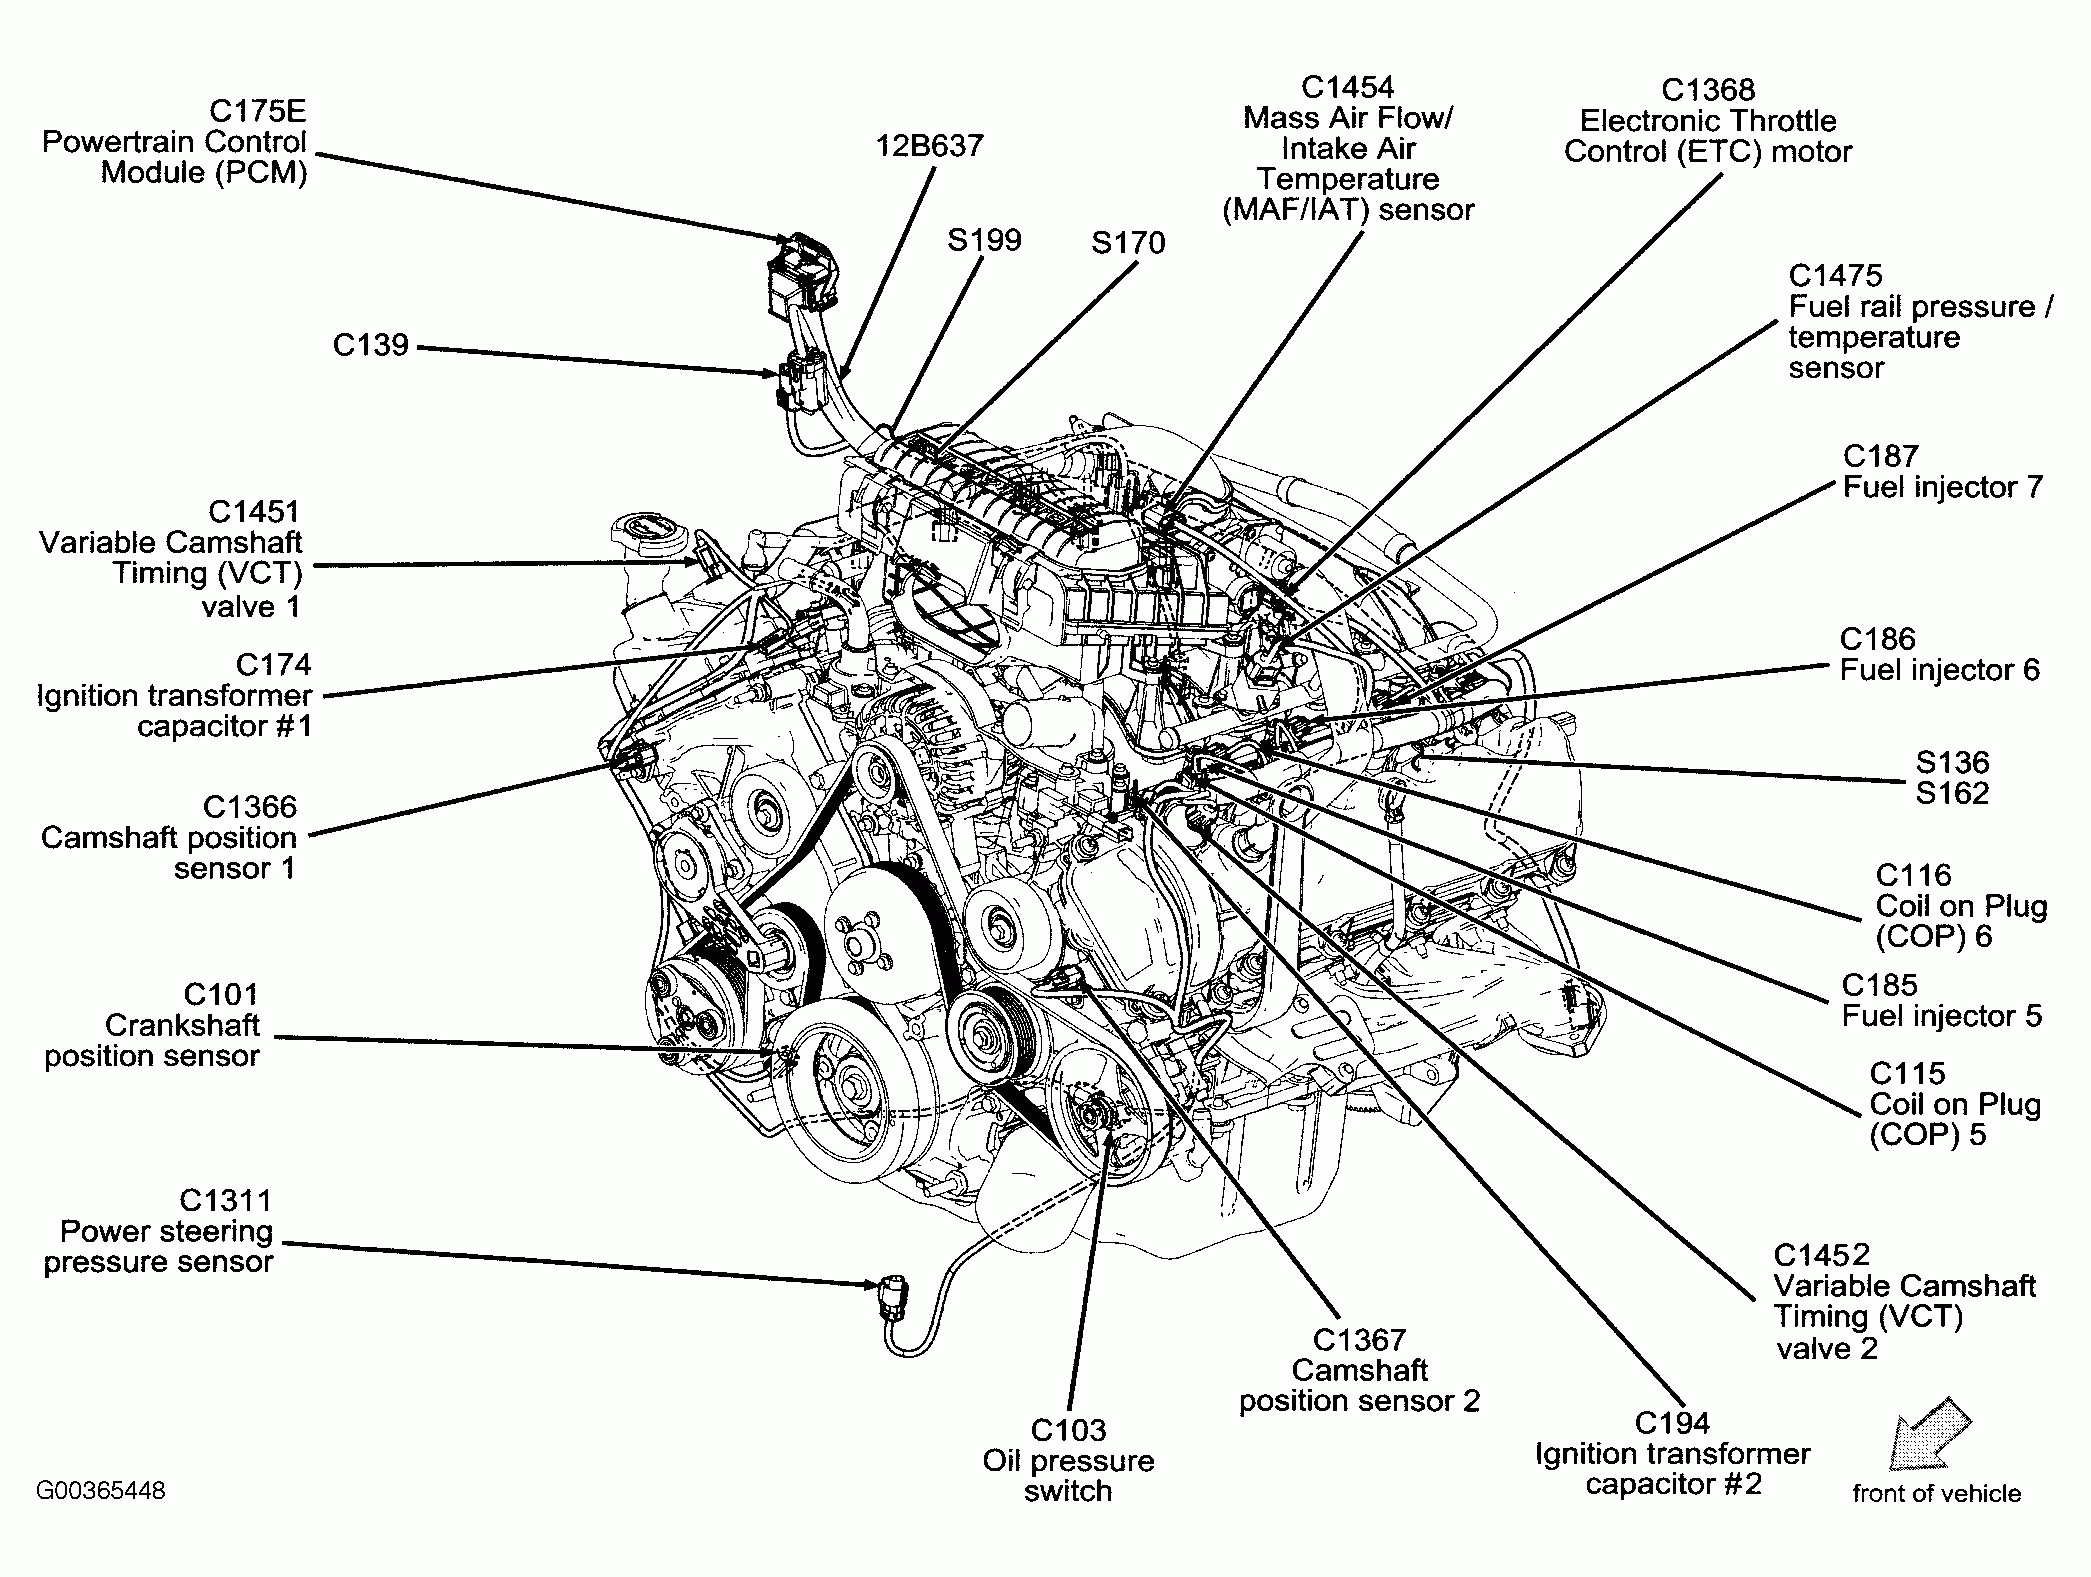 Diagram] 2004 Ford Star 4 2 Engine Diagram Full Version Hd